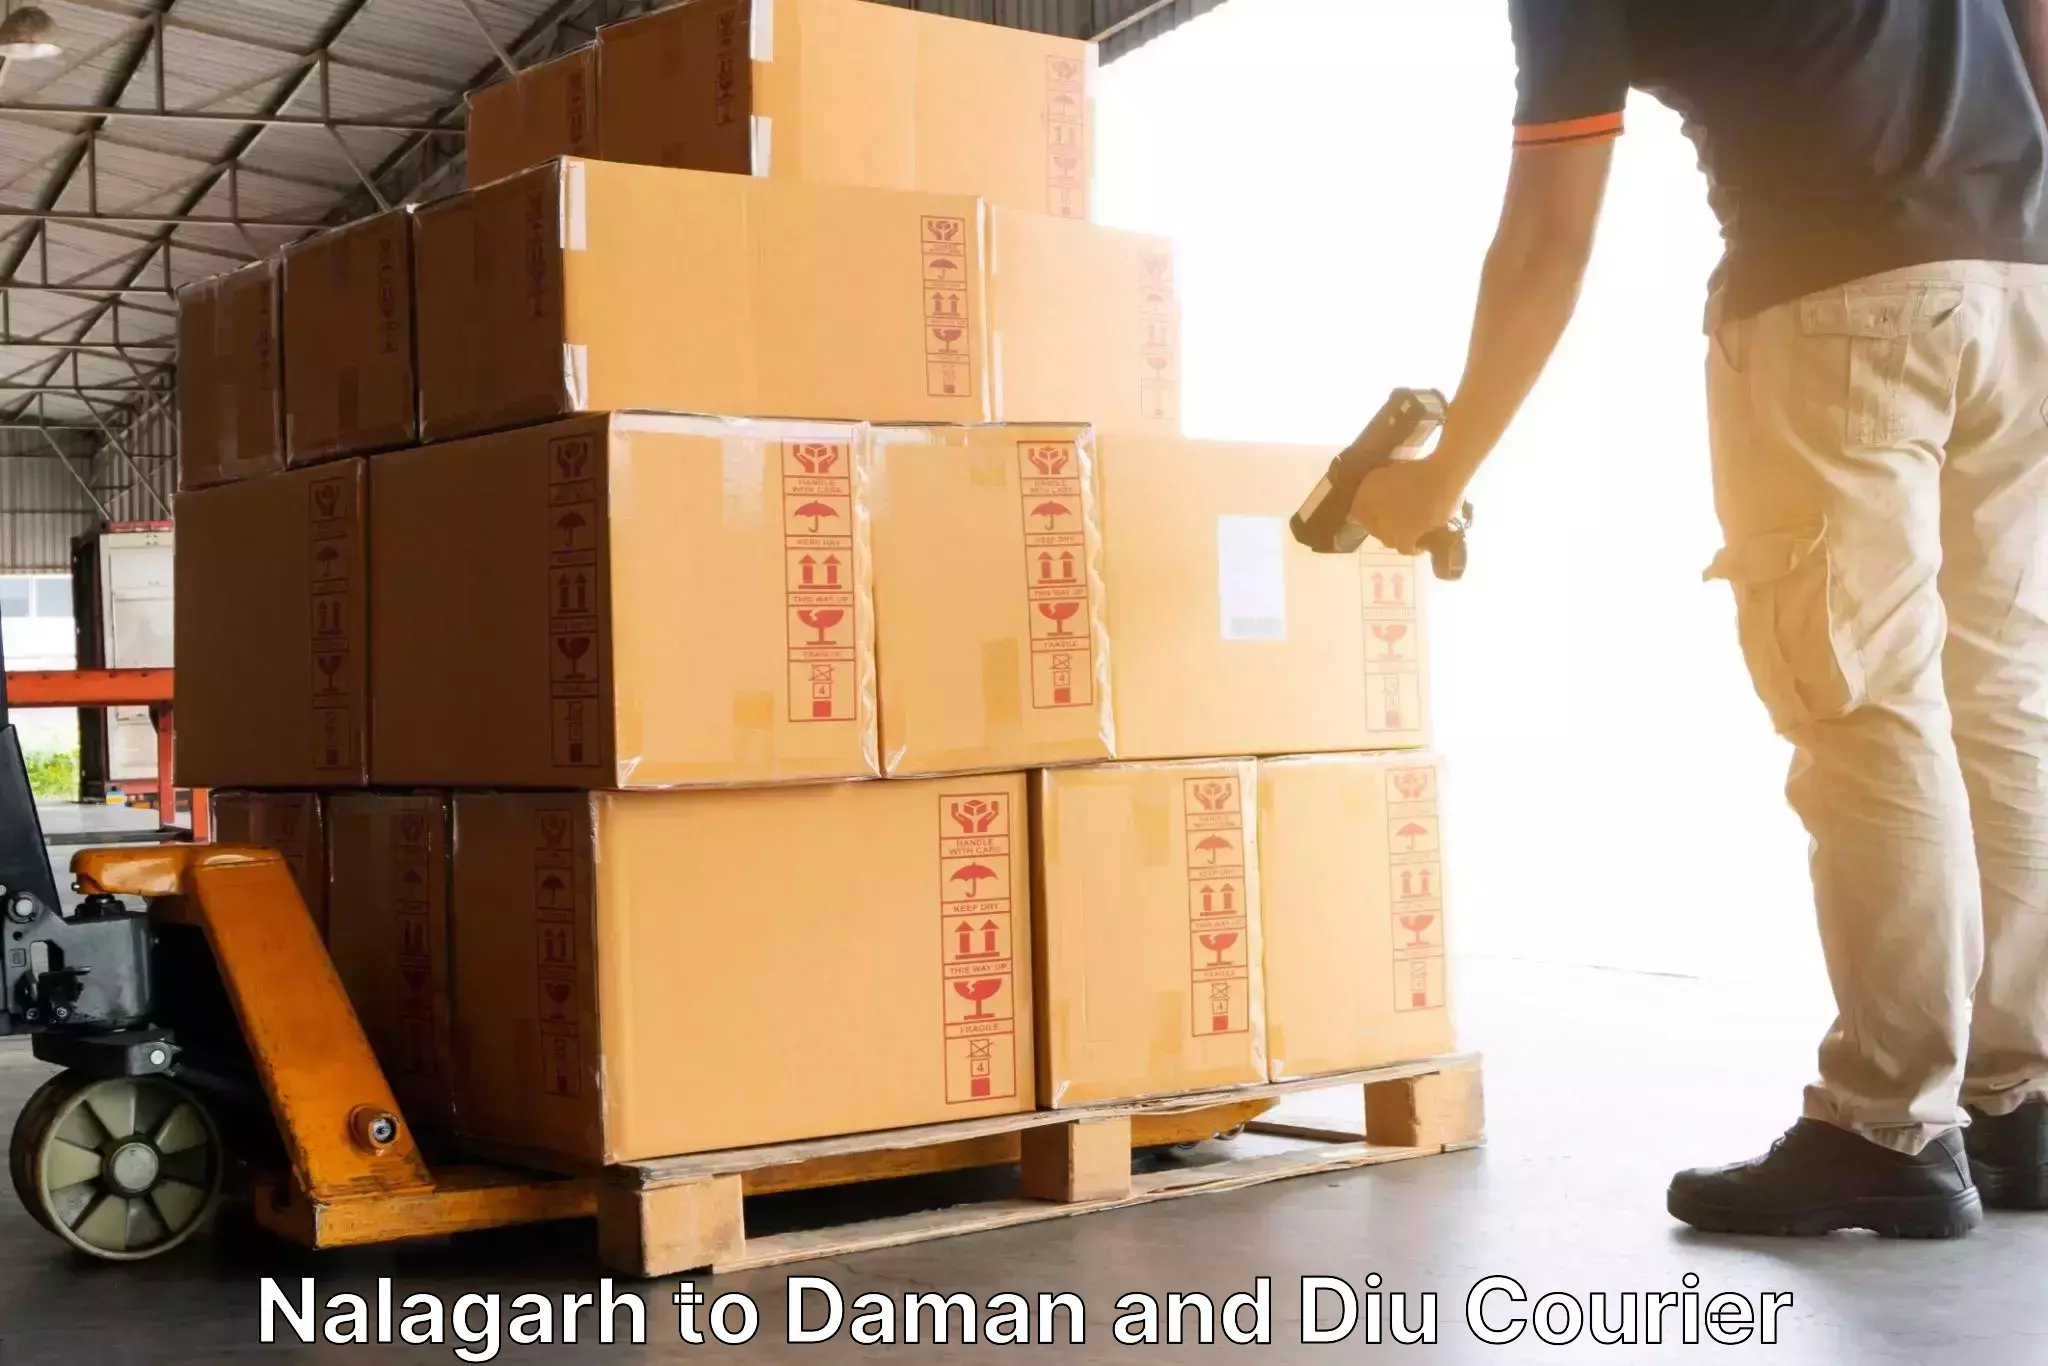 Delivery service partnership Nalagarh to Diu